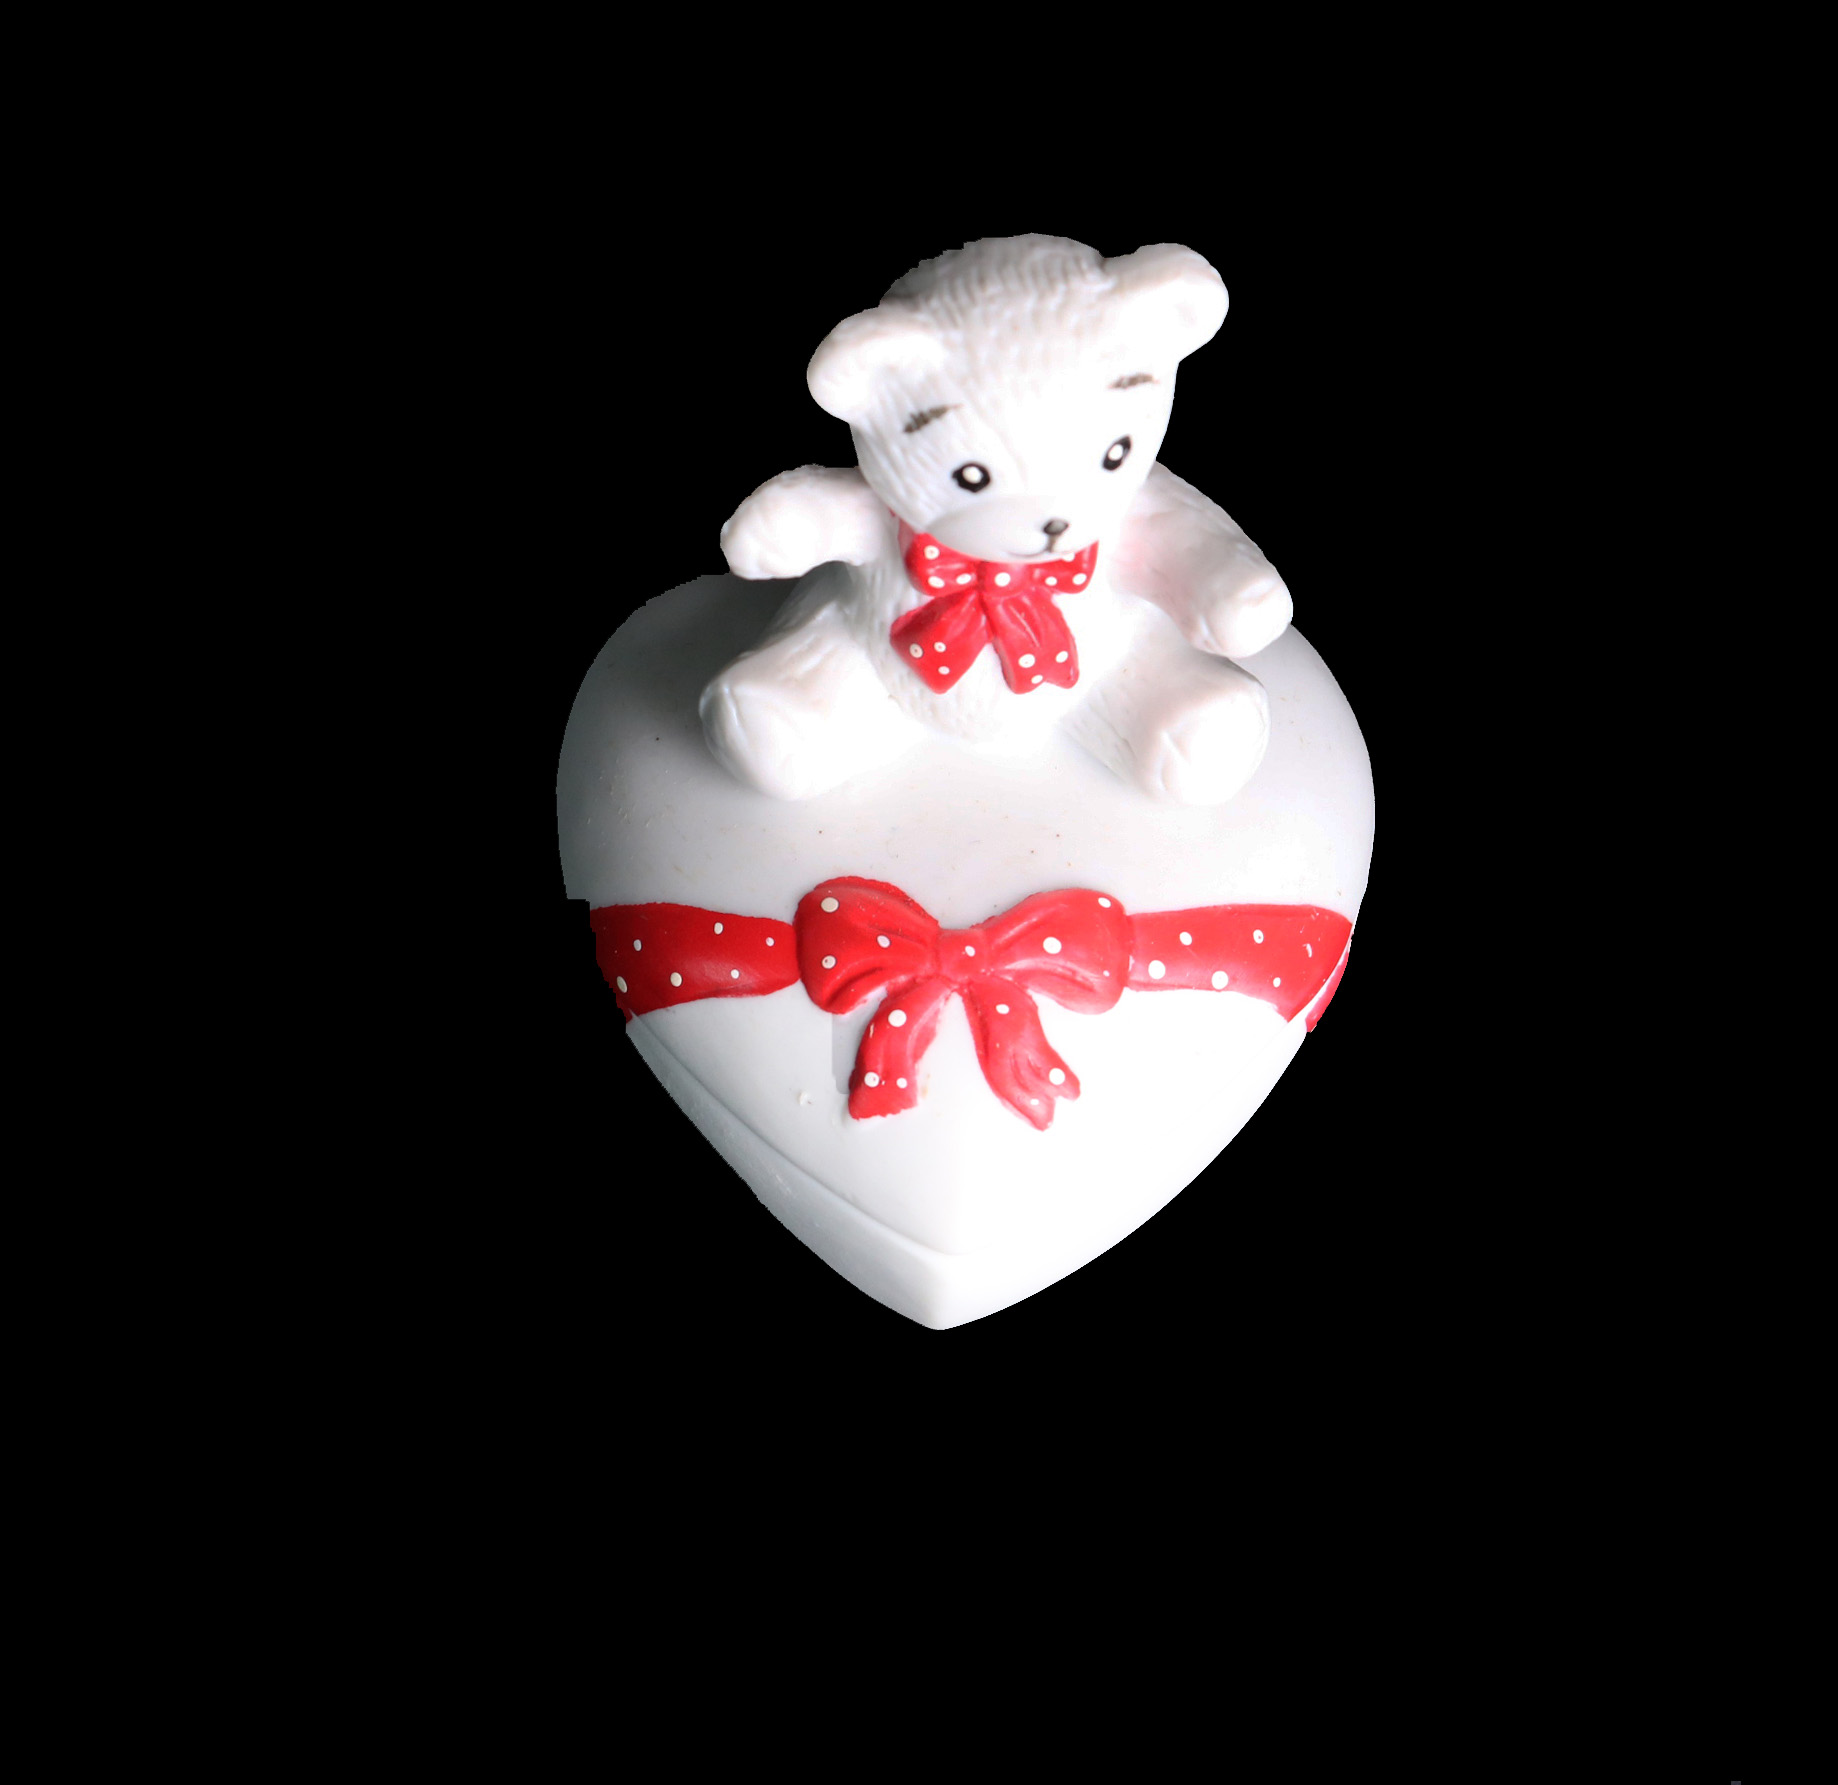 Heart Shaped Trinket Box With White Bear